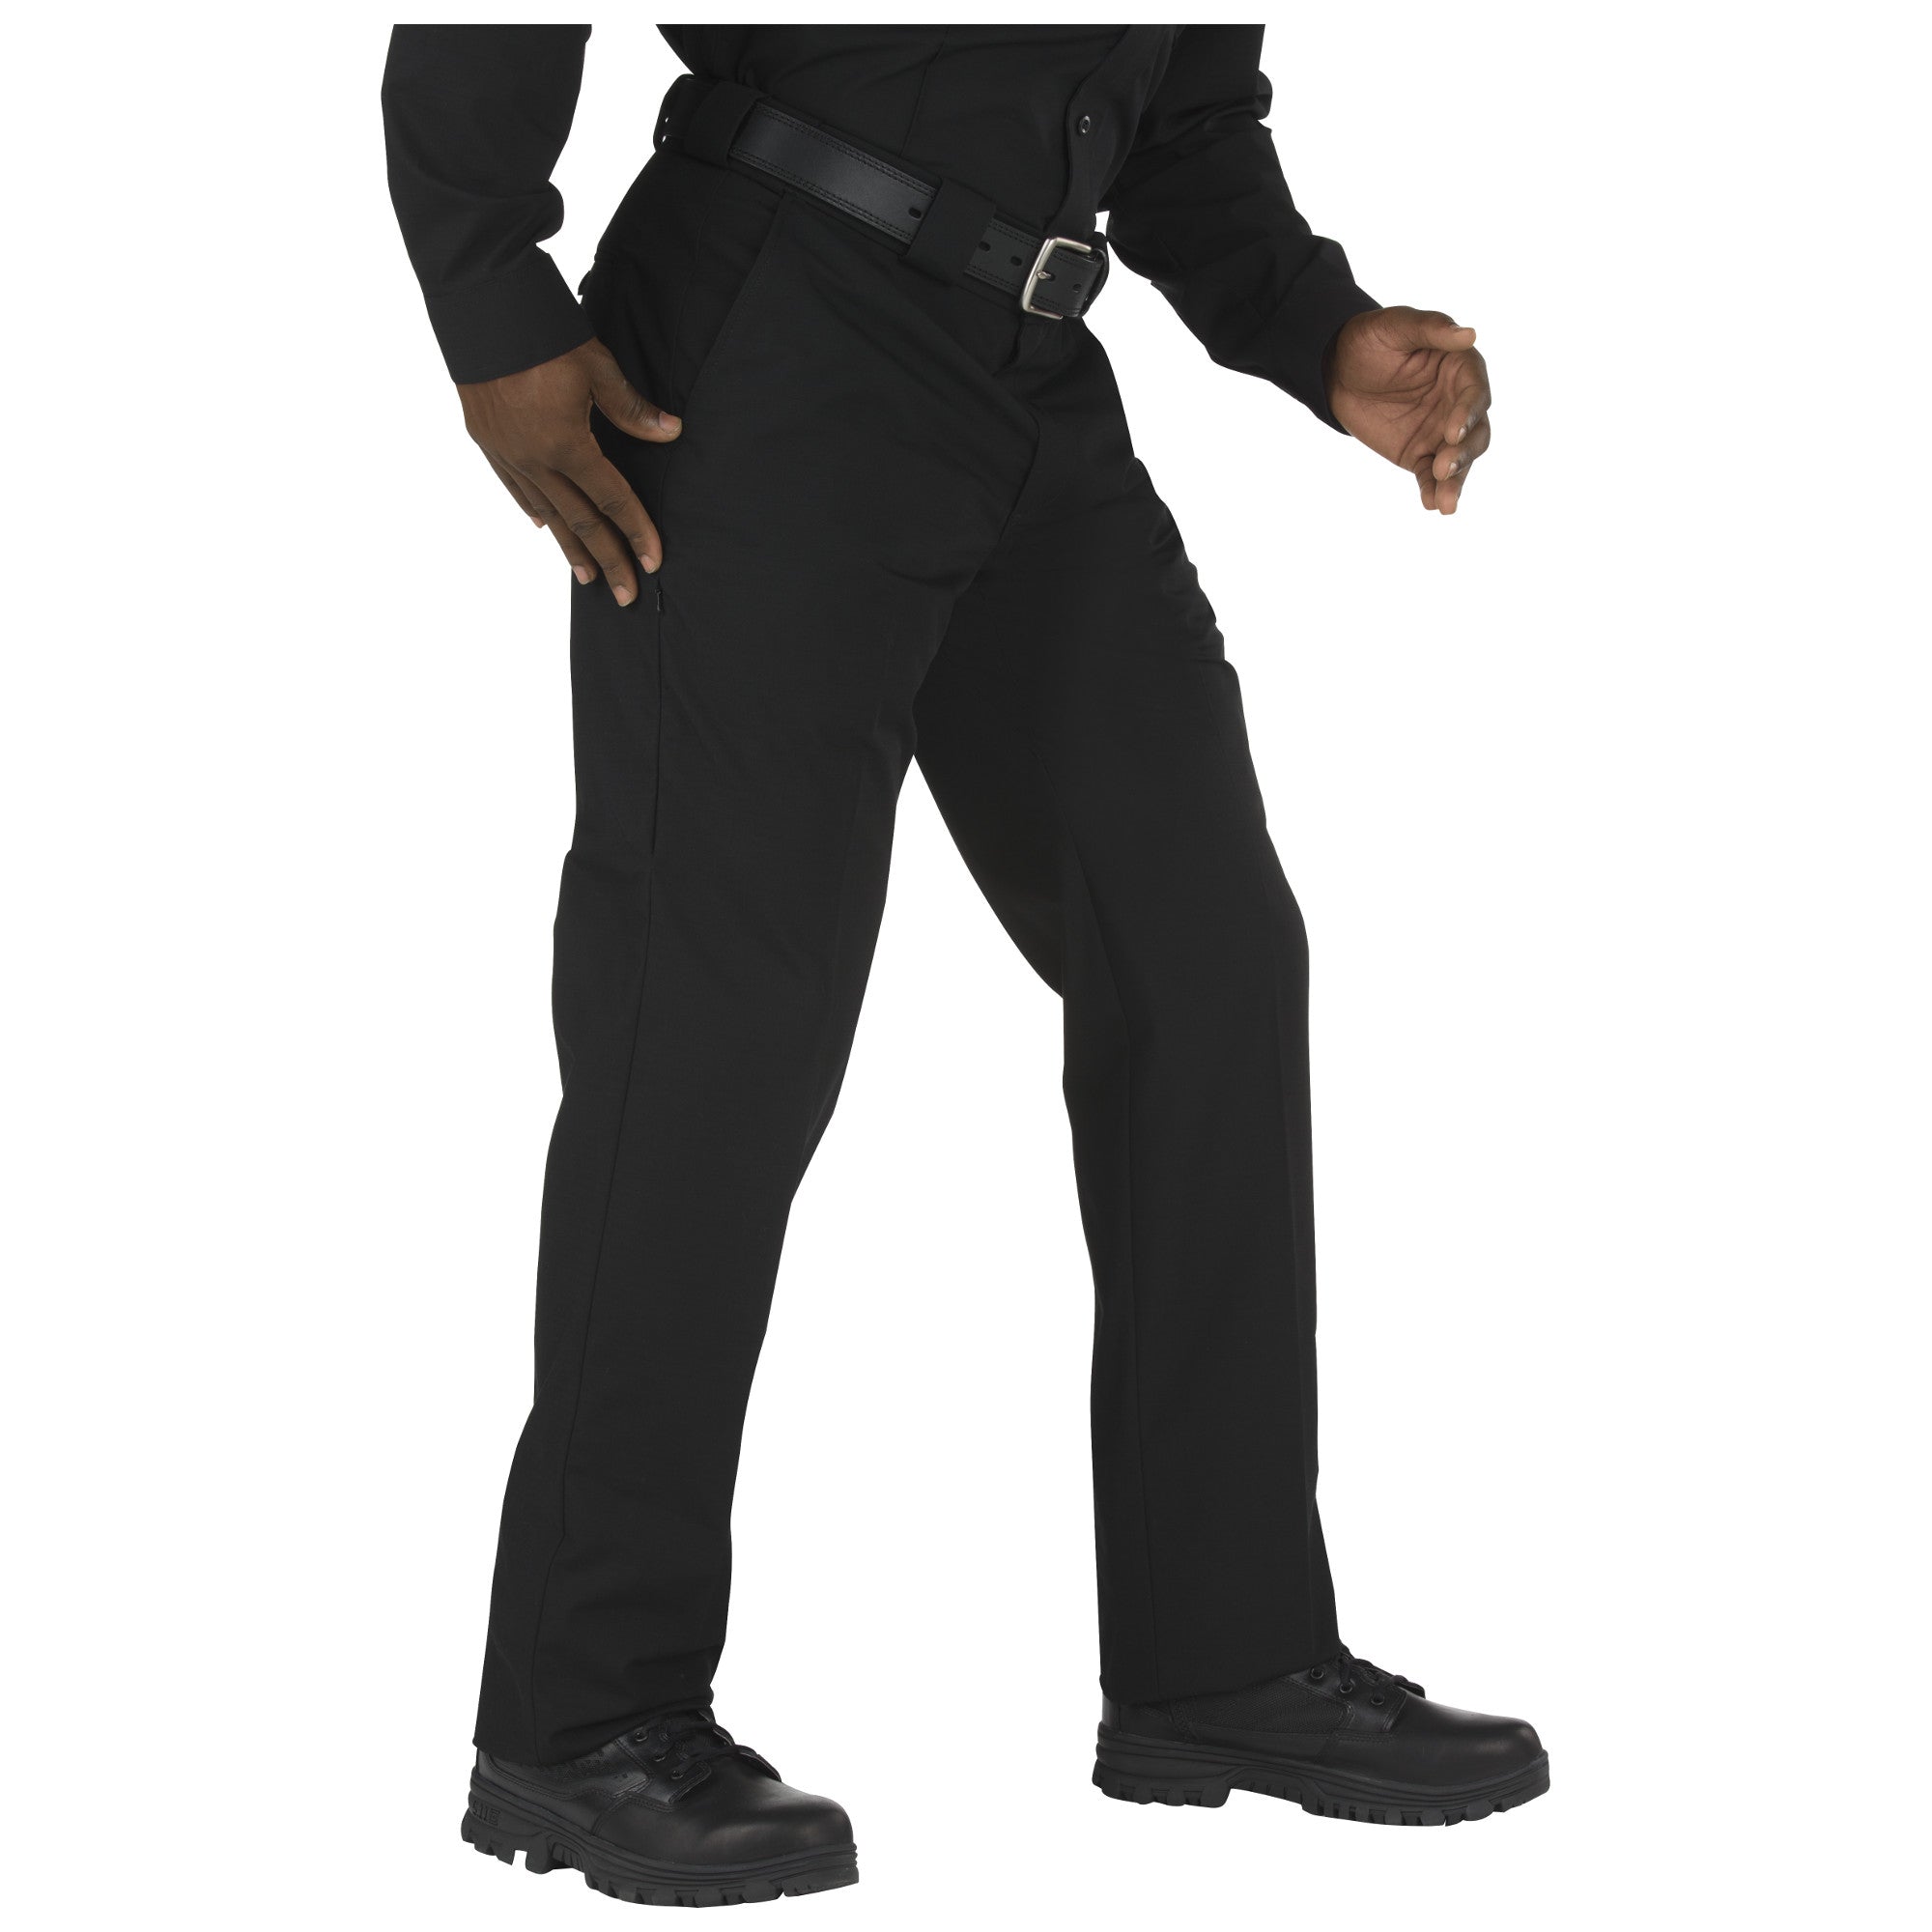 5.11 Tactical Men's Stryke PDU Class A Pants Black Tactical Gear Australia Supplier Distributor Dealer